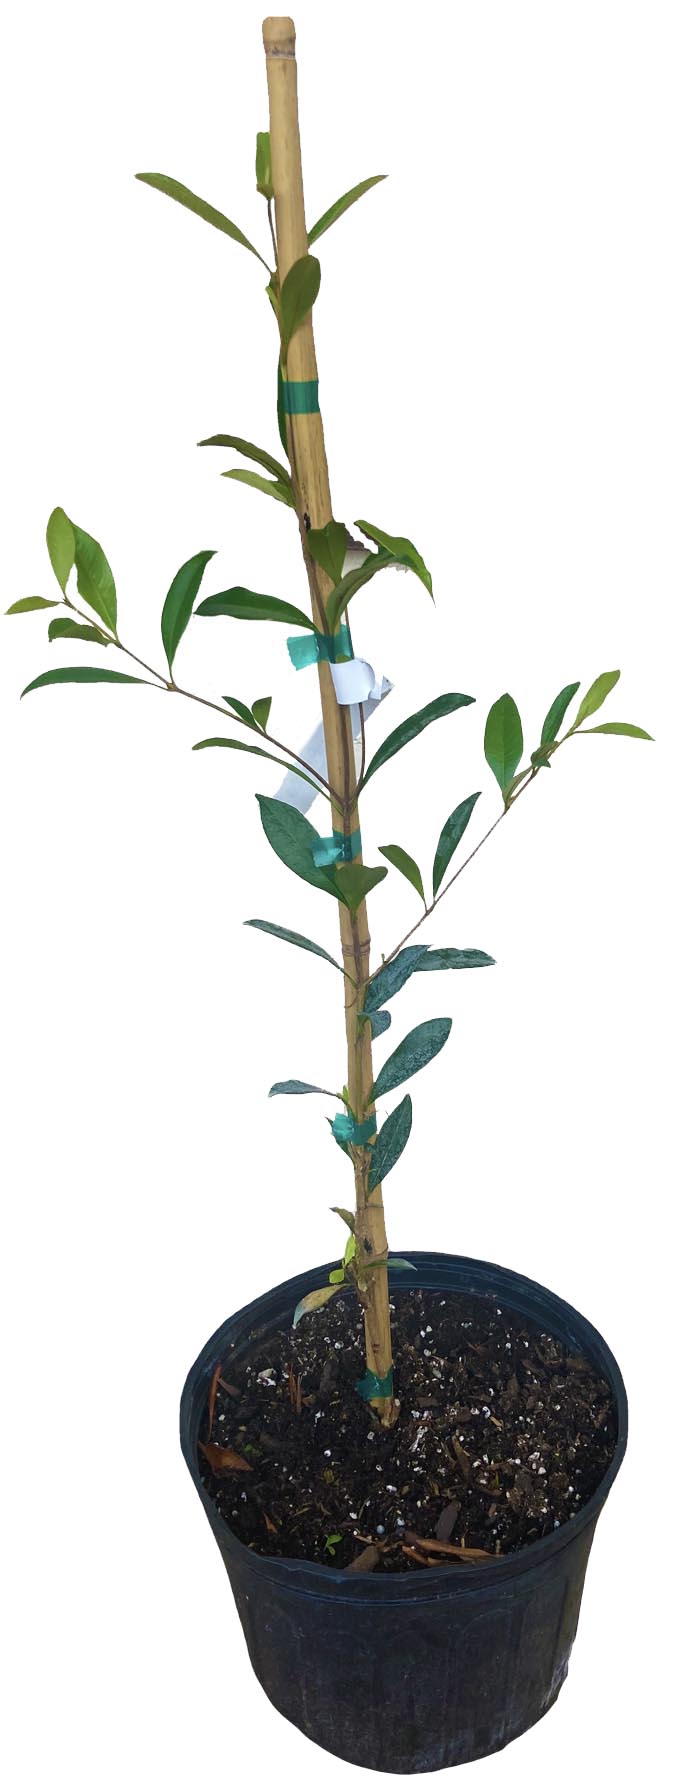 Pitomba [Eugenia luschnathiana] Tree